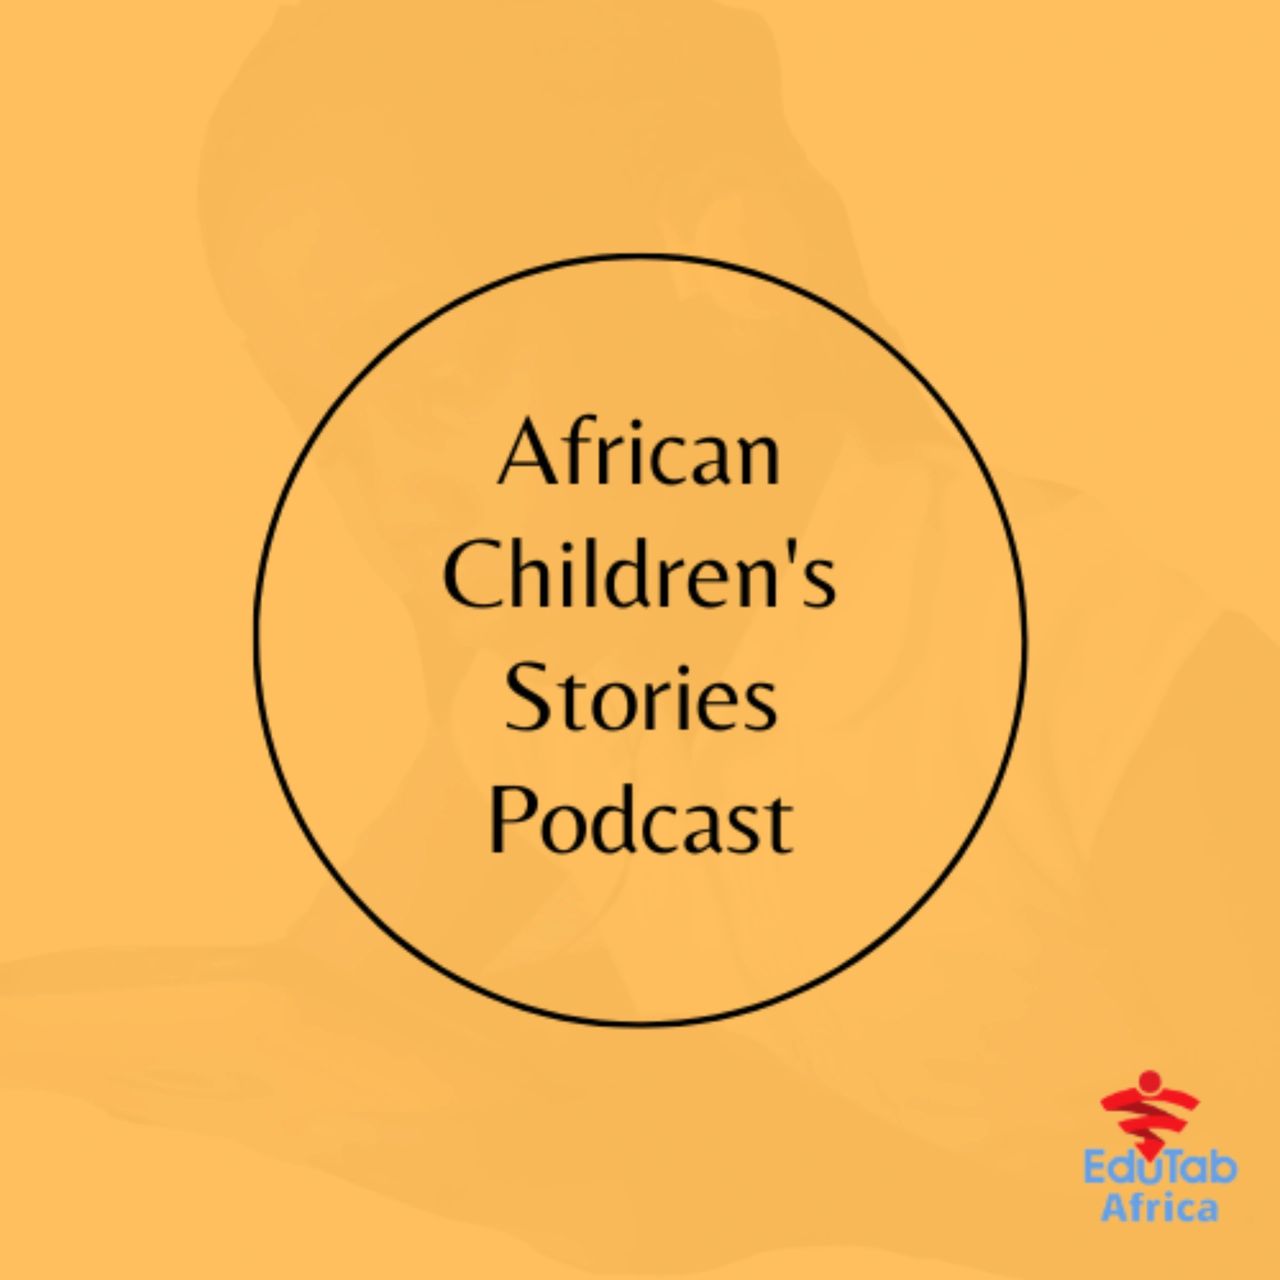 African Children's Stories Podcast